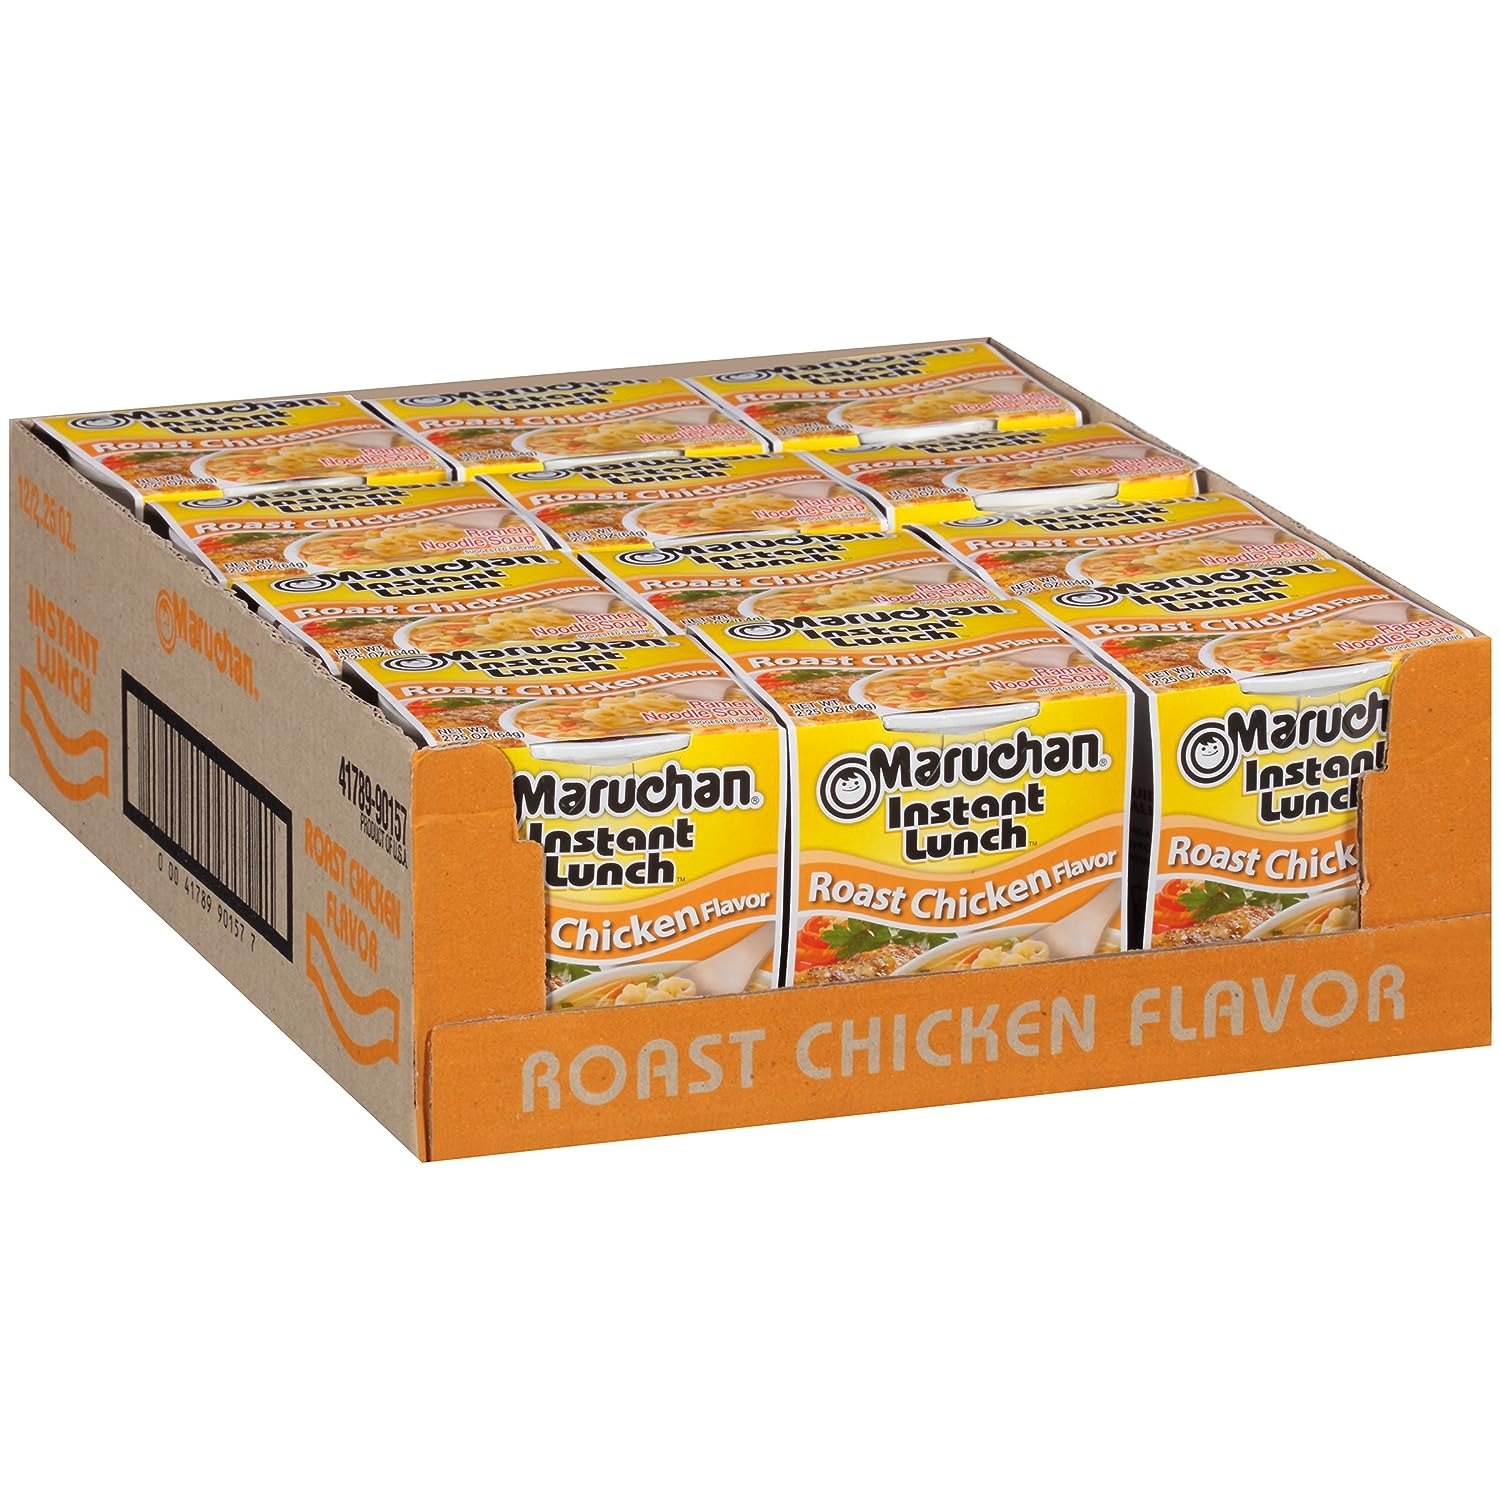 Maruchan Instant Lunch Roast Chicken, Ramen Noodle Soup, Microwaveable Meal, 2.25 Oz, 12 Count